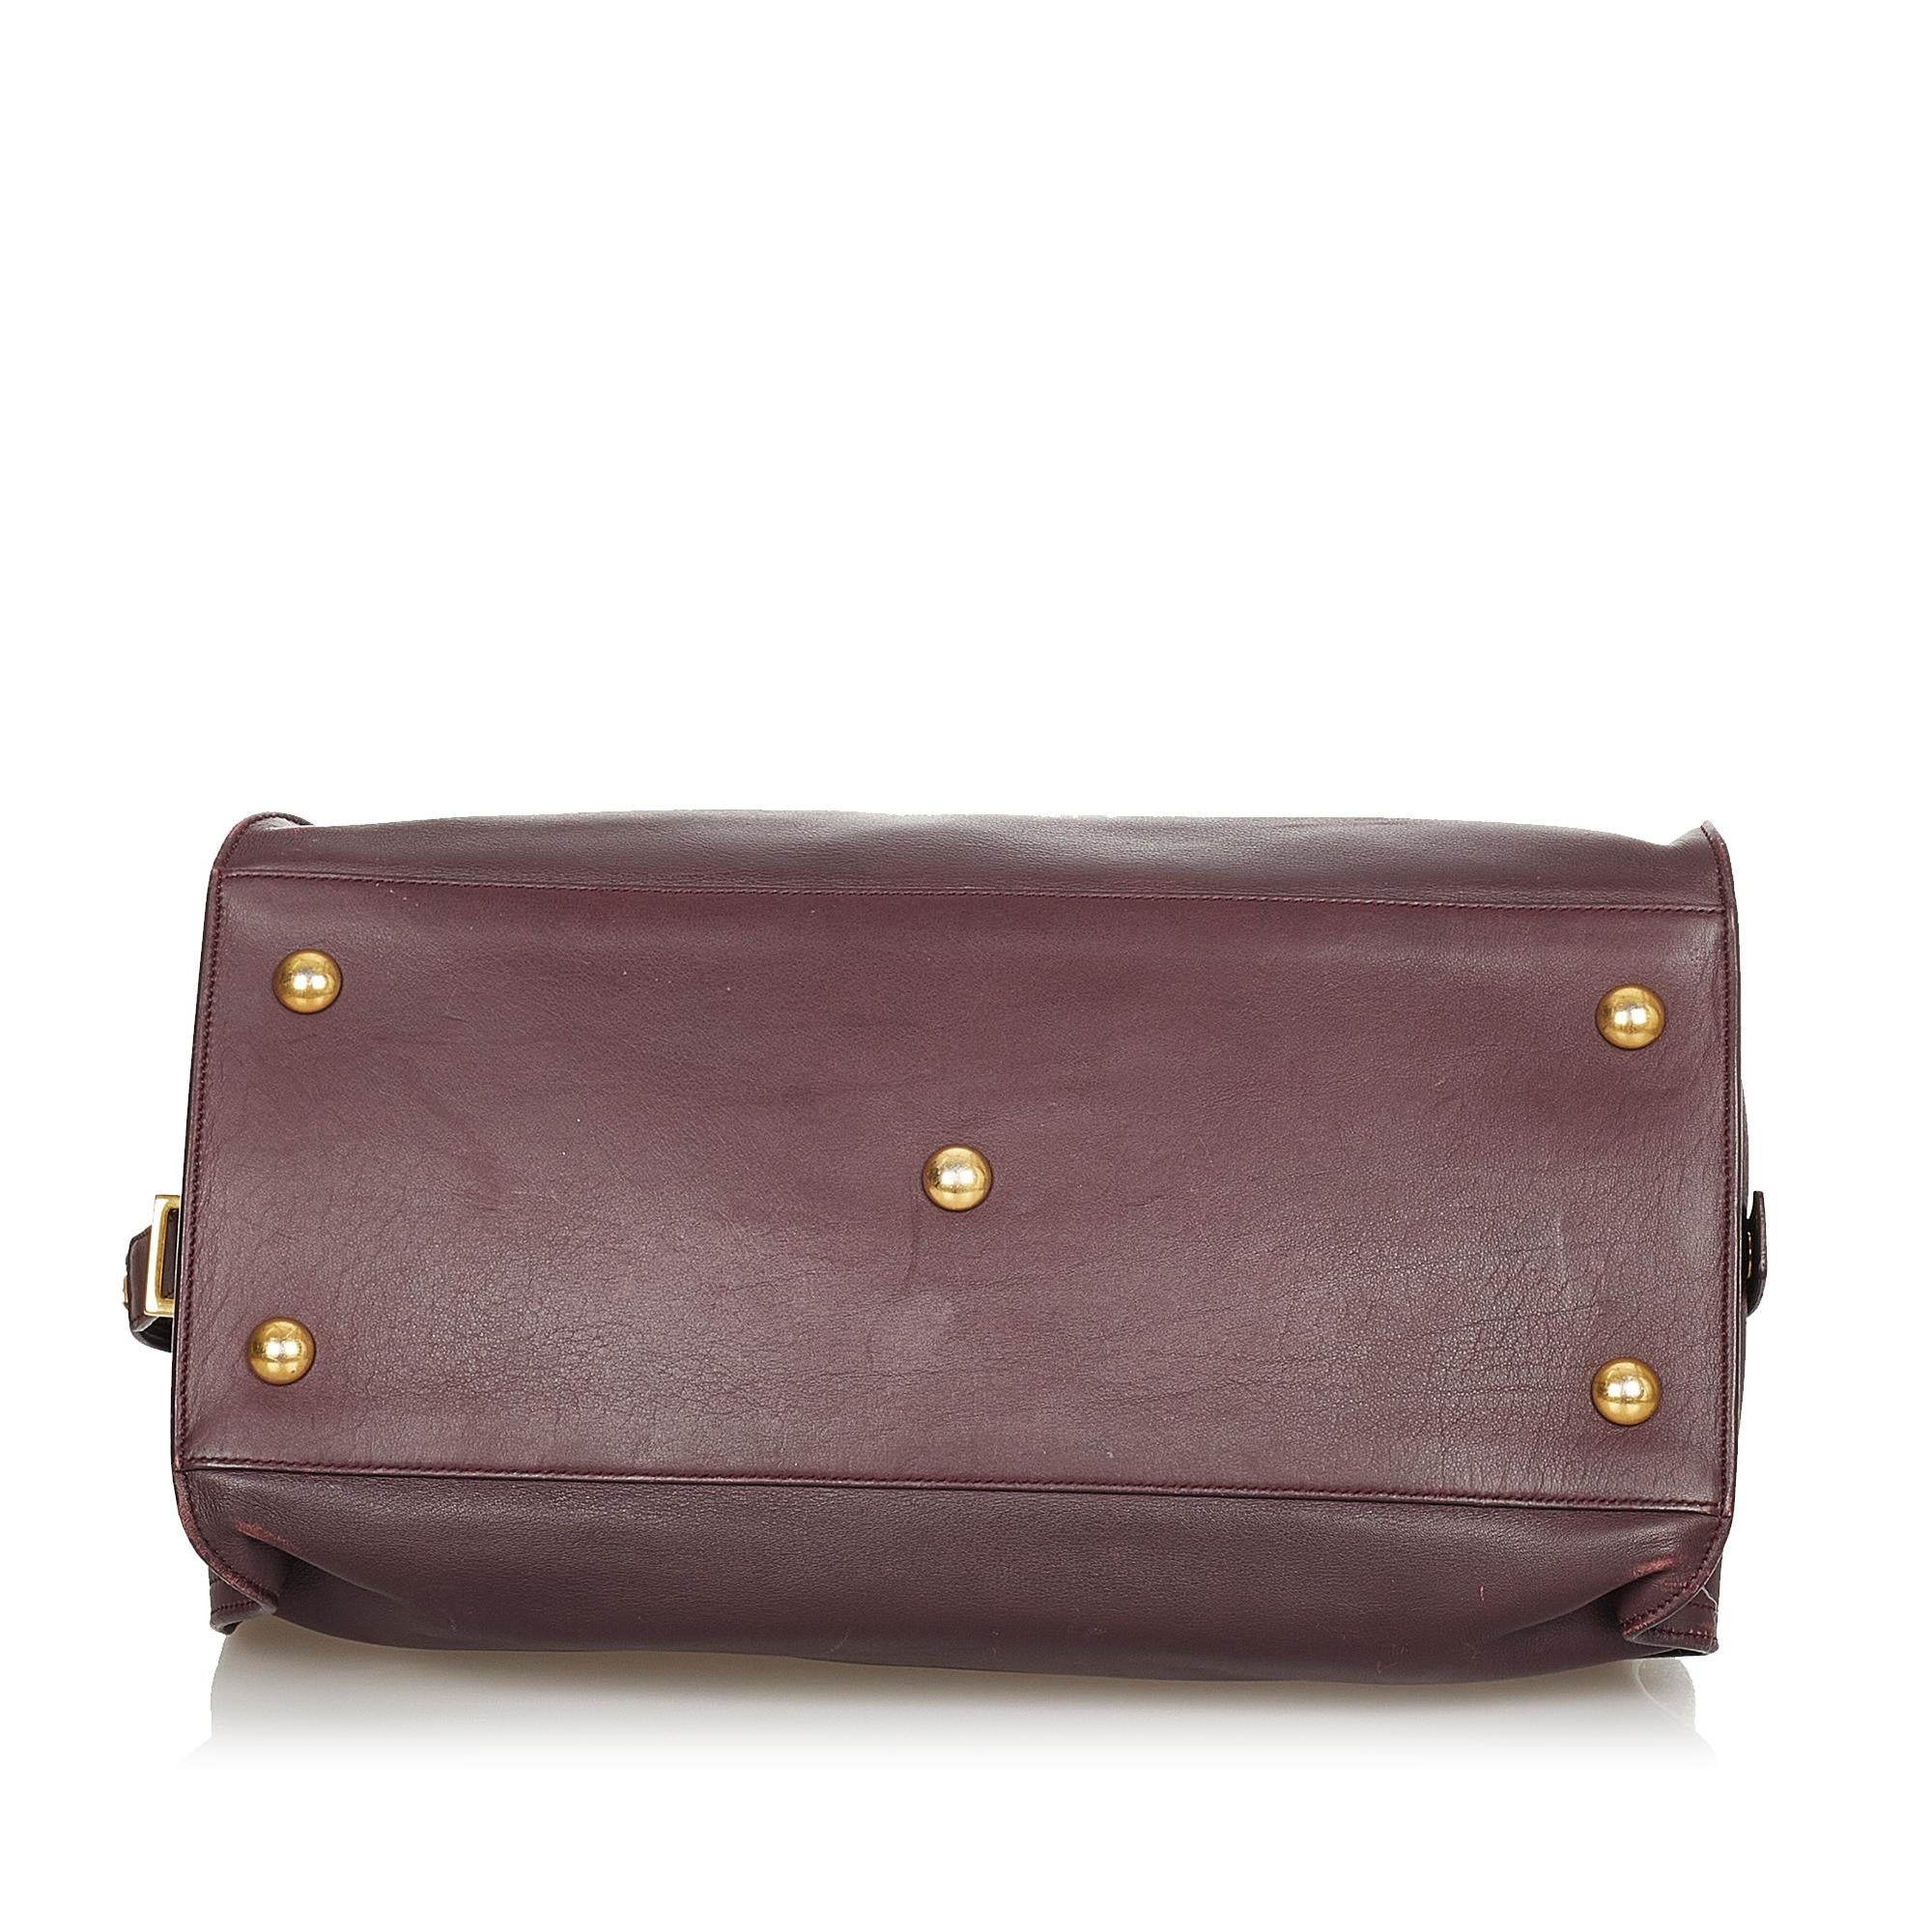 Saint Laurent Cabas Chyc Leather Handbag